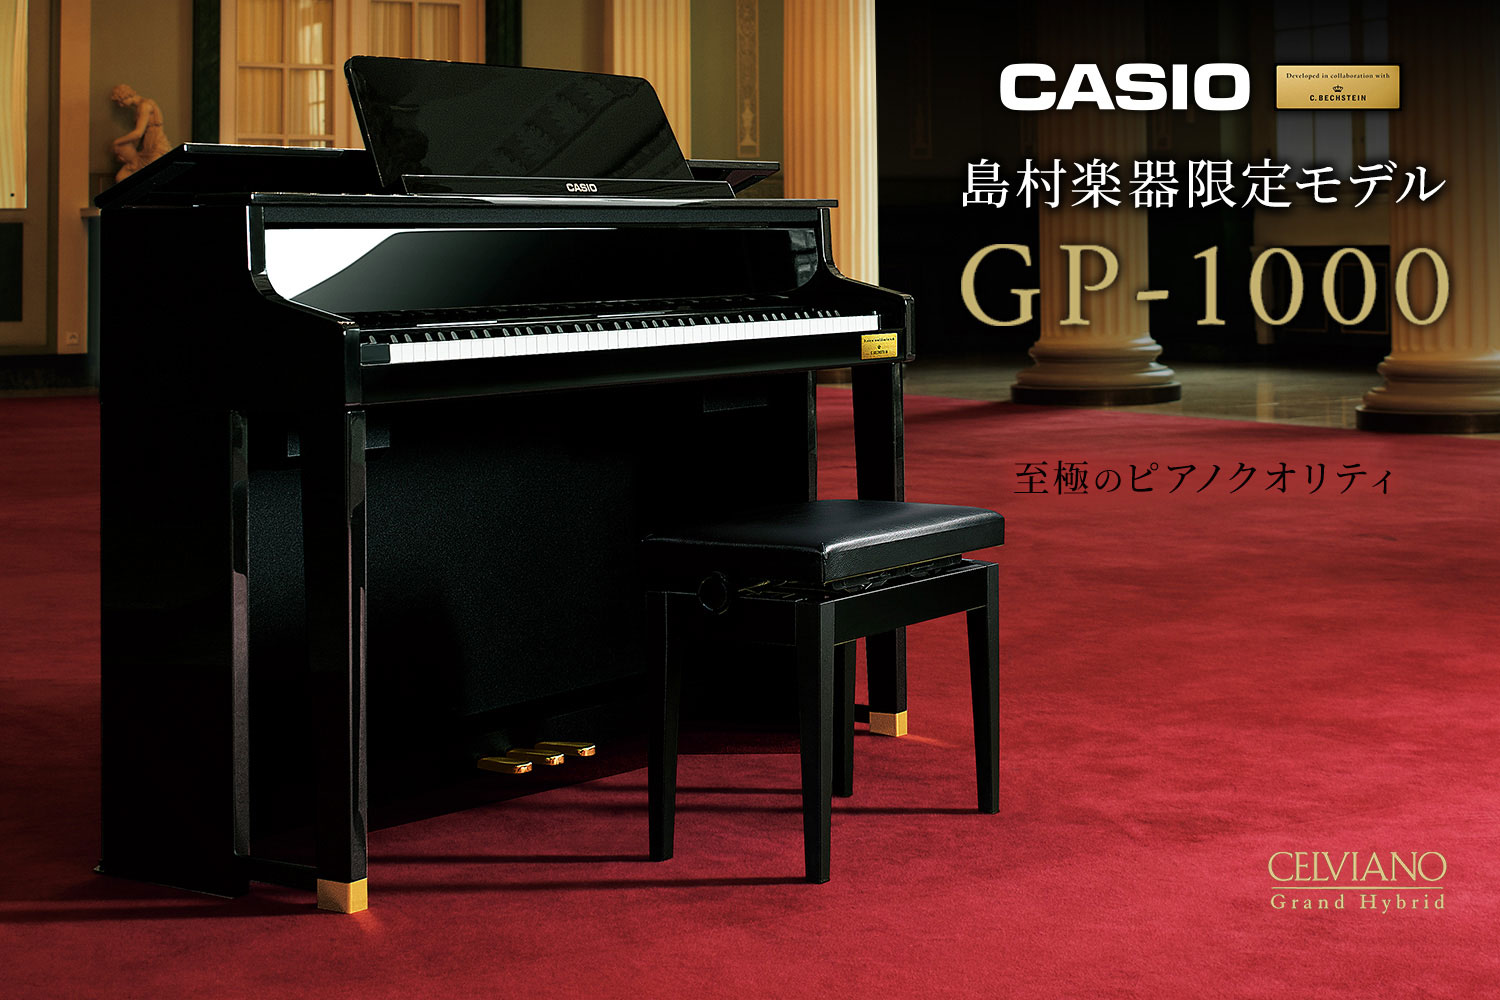 CASIO×C.ベヒシュタイン コラボレーション電子ピアノ 島村楽器限定モデル「GP-1000」のご紹介！